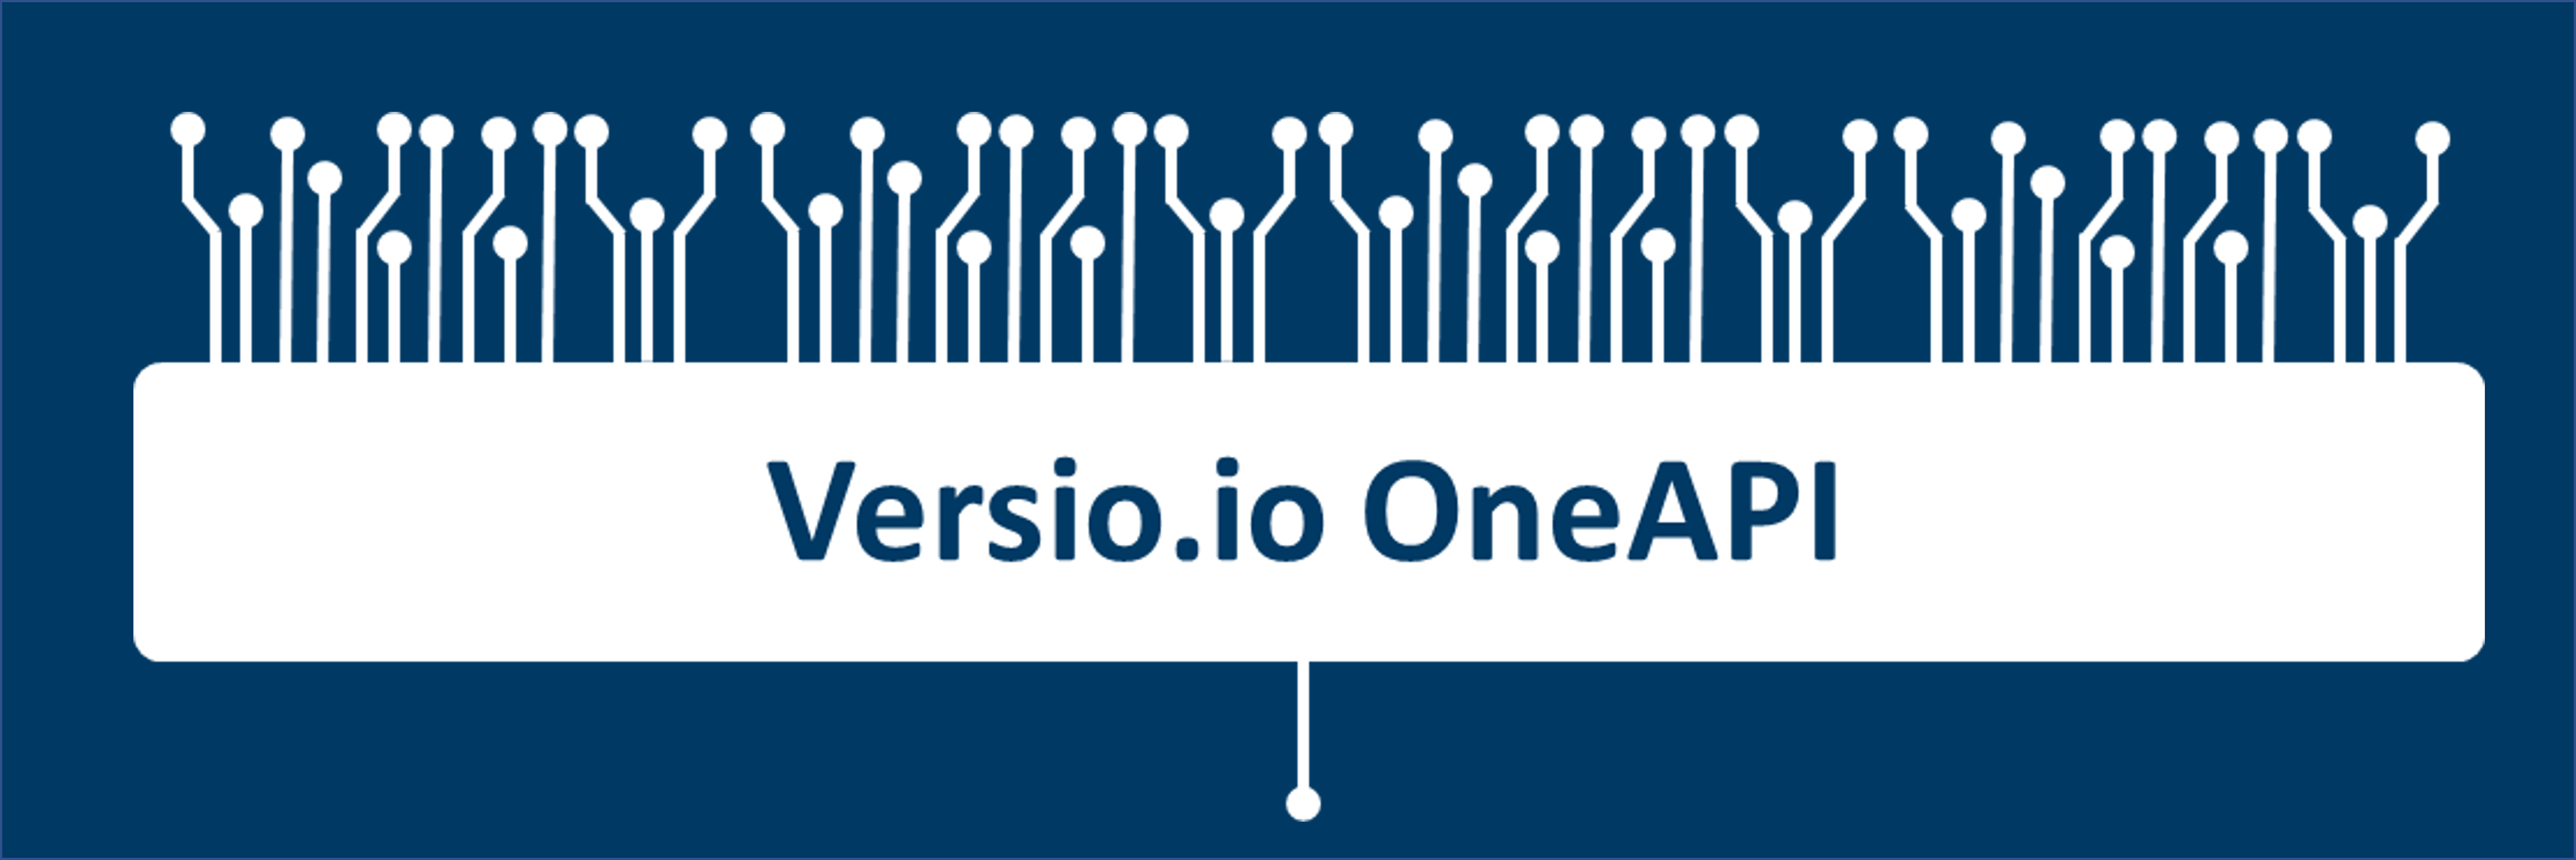 Simplify data access via Versio.io OneAPI